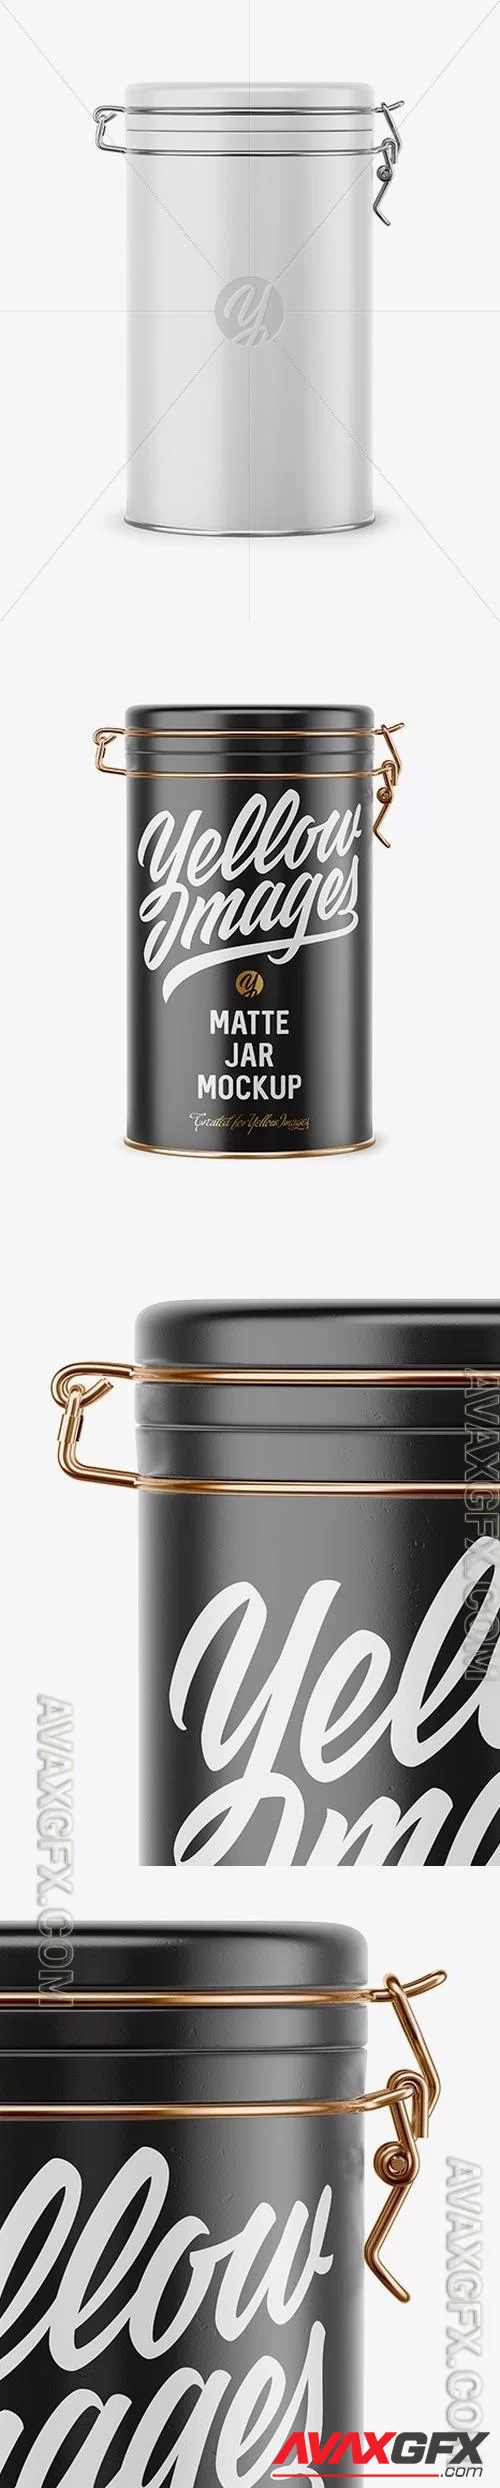 Matte Ceramic Jar With Locking Lid Mockup 45754 [TIF]